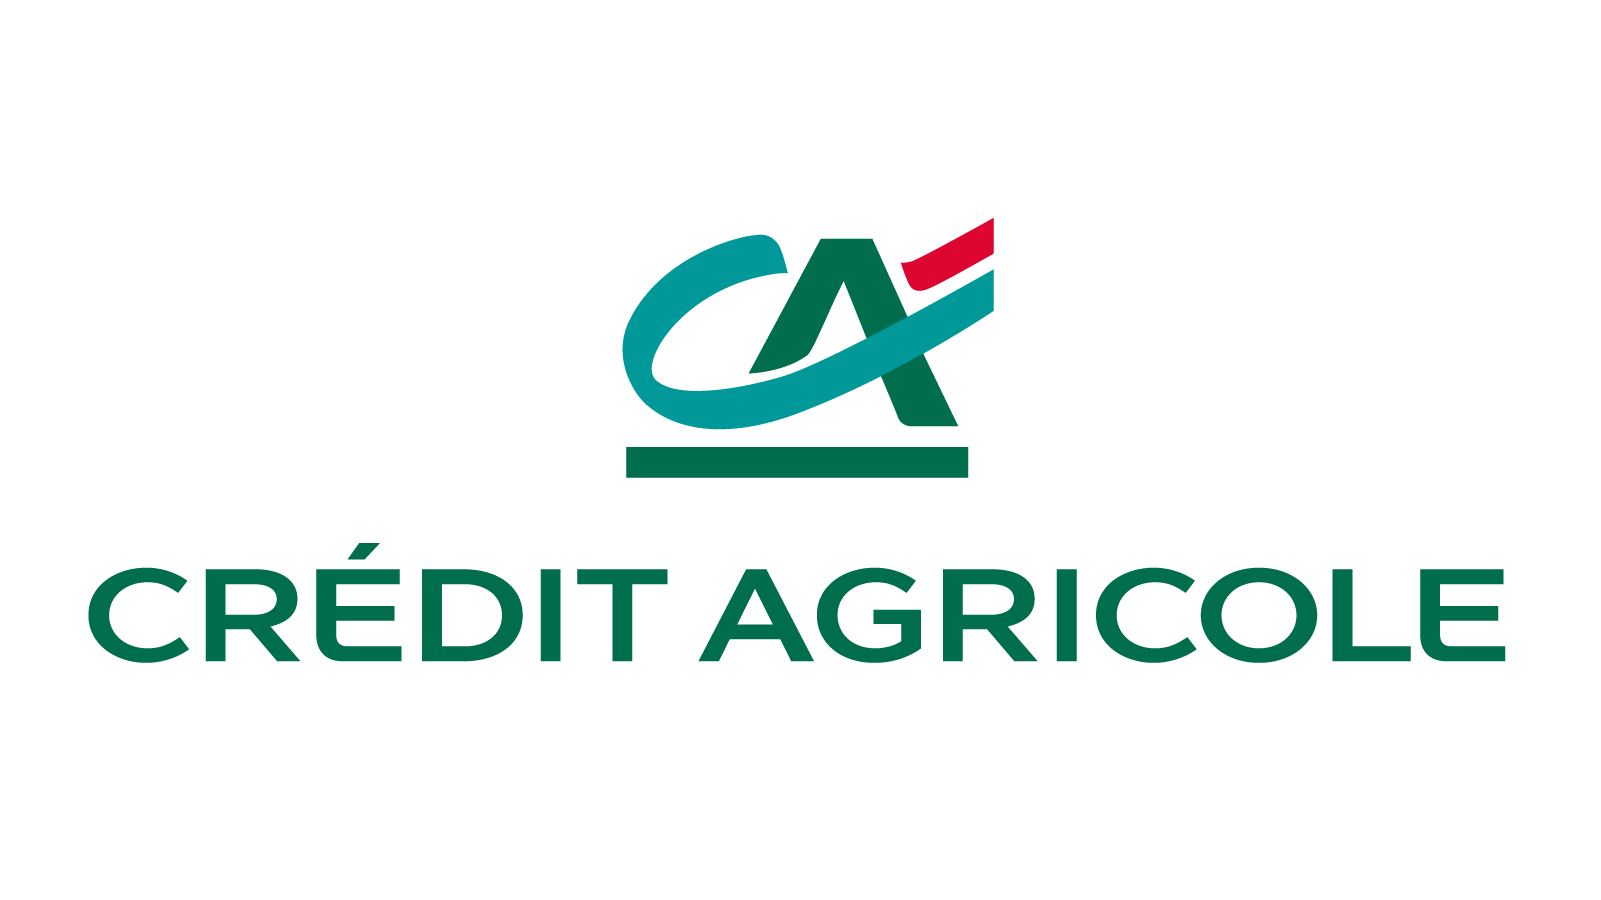 Groupe Crdit Agricole logo